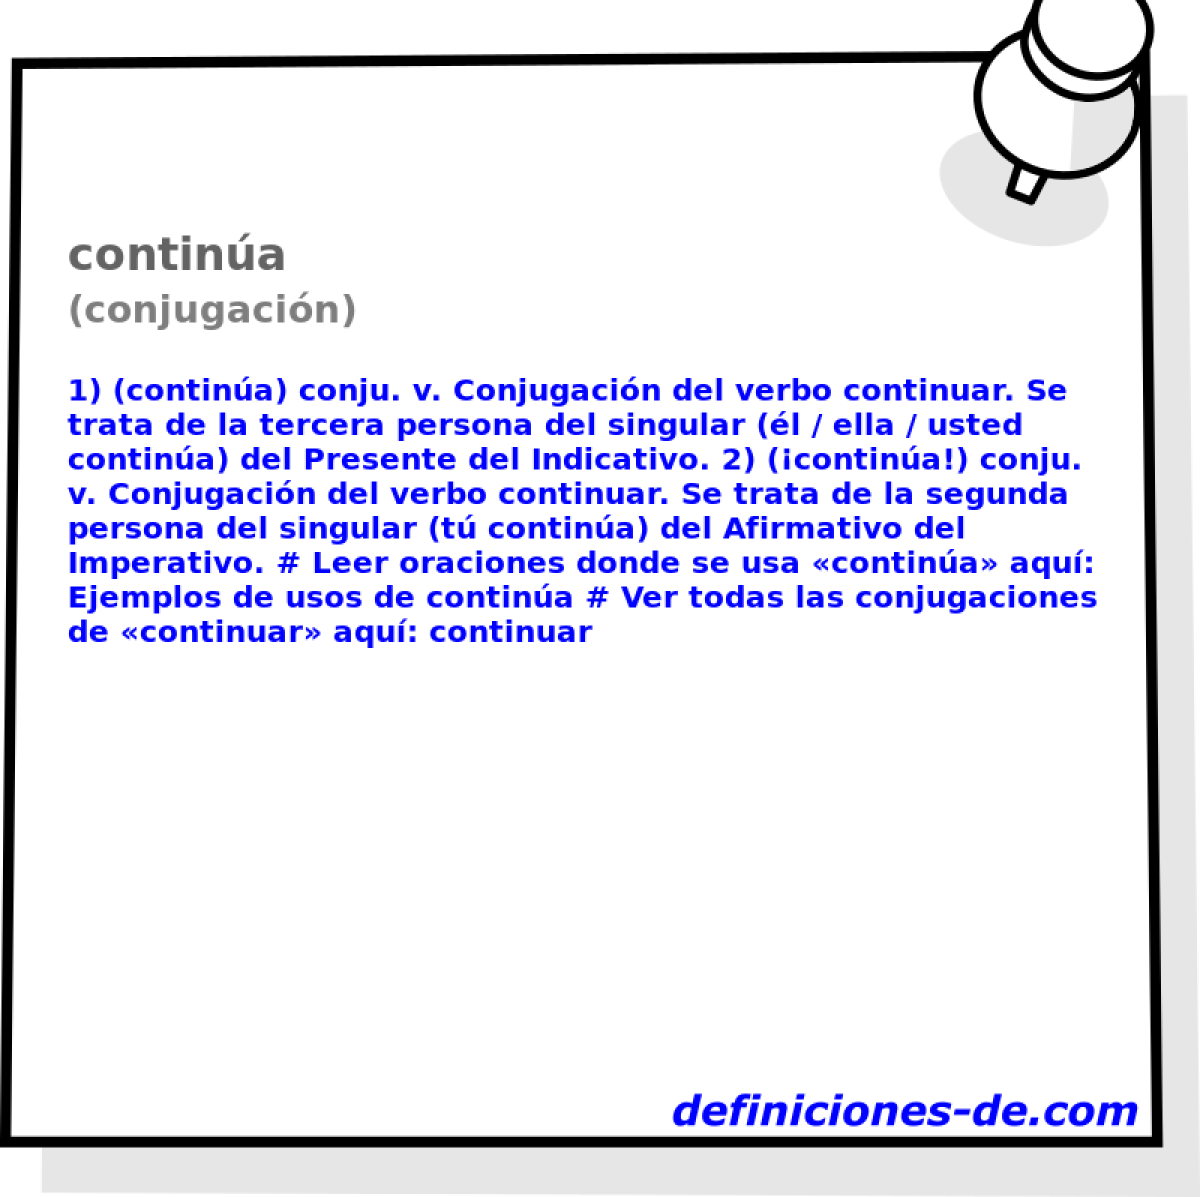 contina (conjugacin)